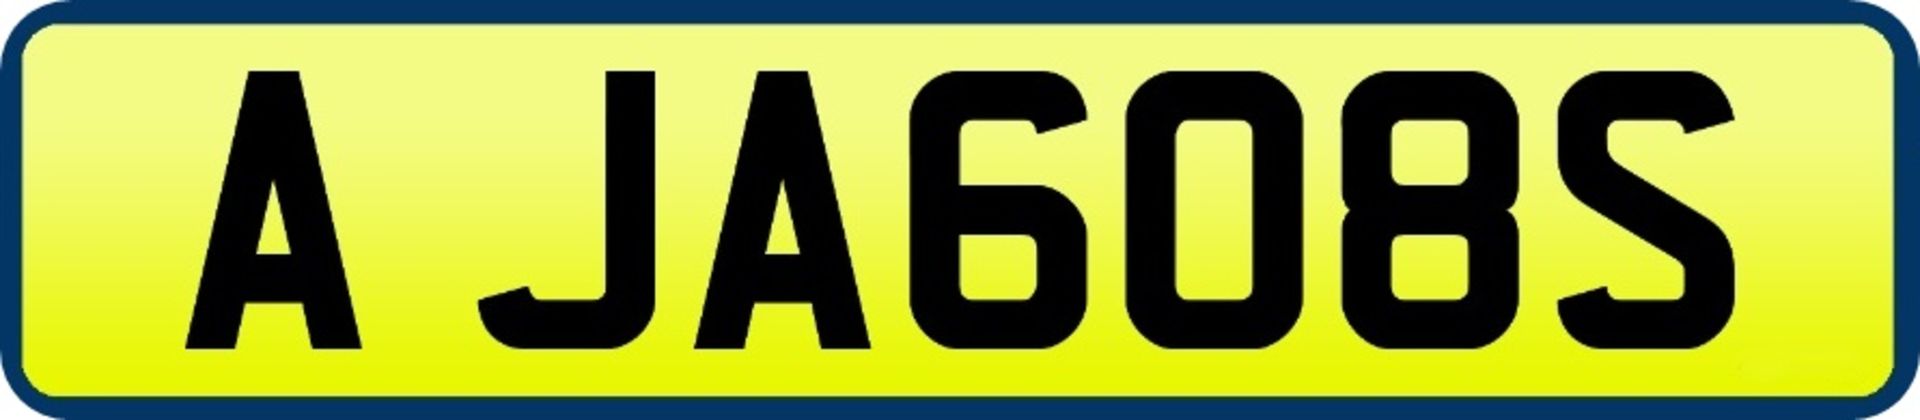 1 x Private Vehicle Registration Car Plate - A JA608S - CL590 - Location: Altrincham WA14More